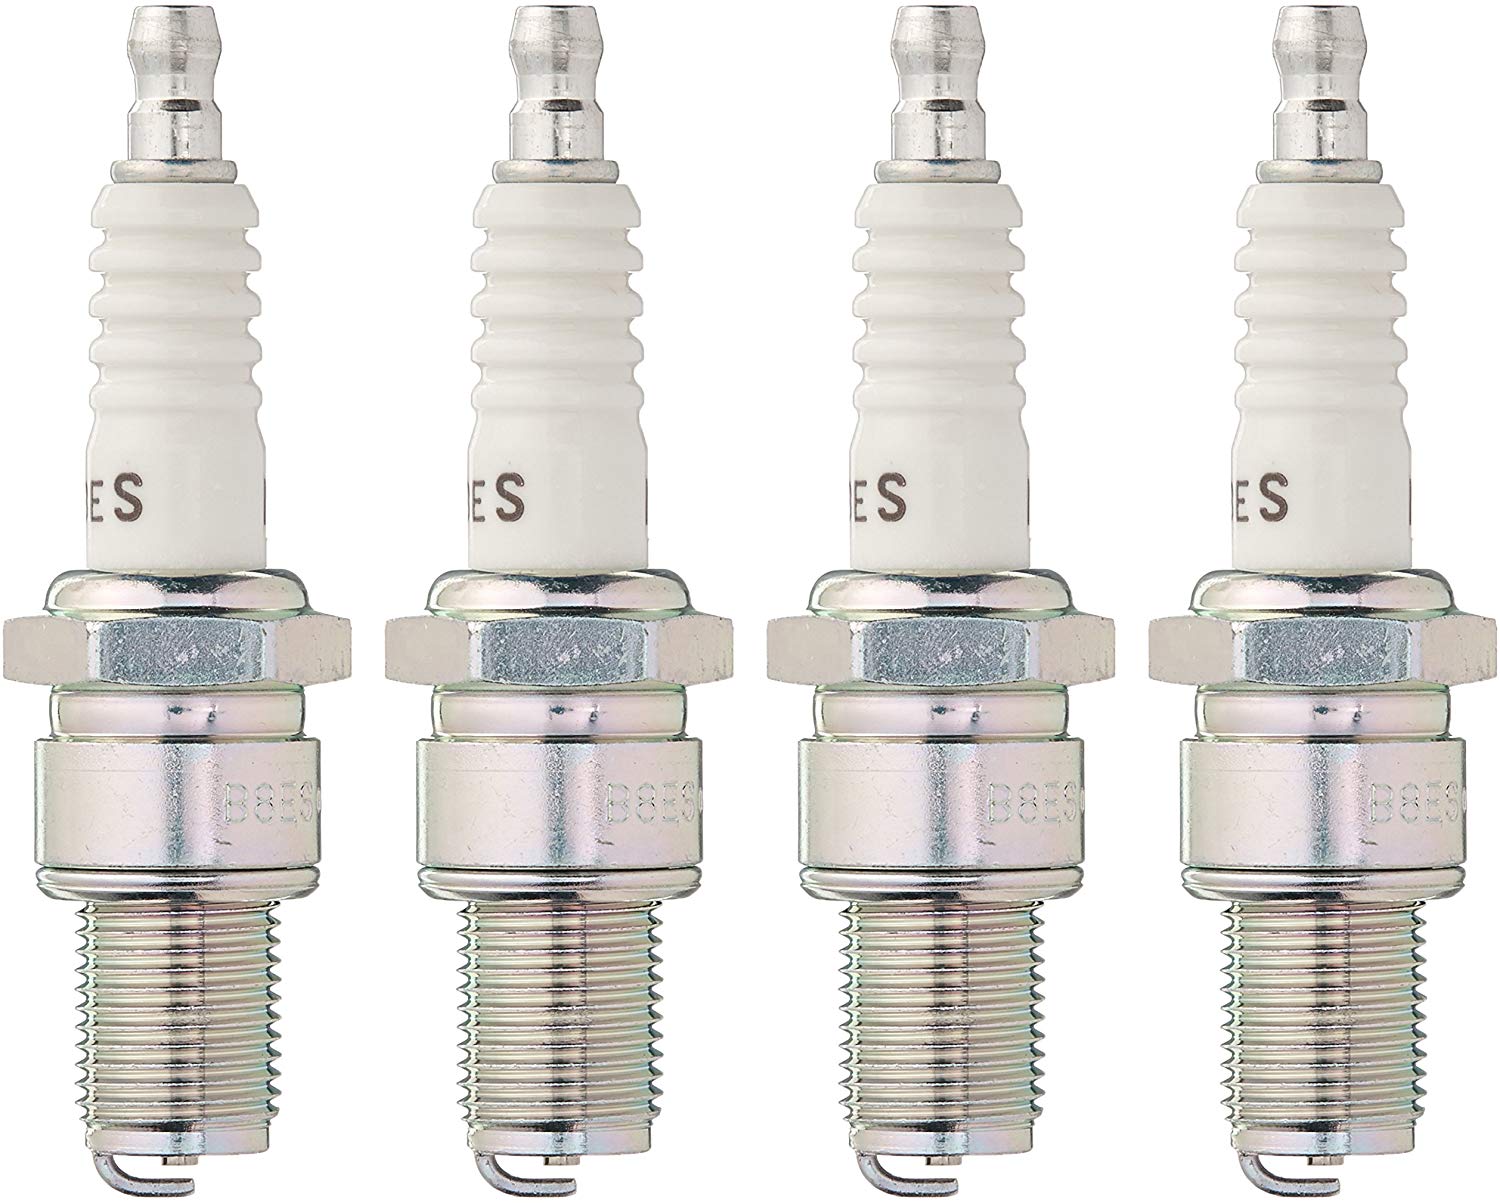 NGK 2411-4PK B8ES Standard Spark Plug, 4 Pack